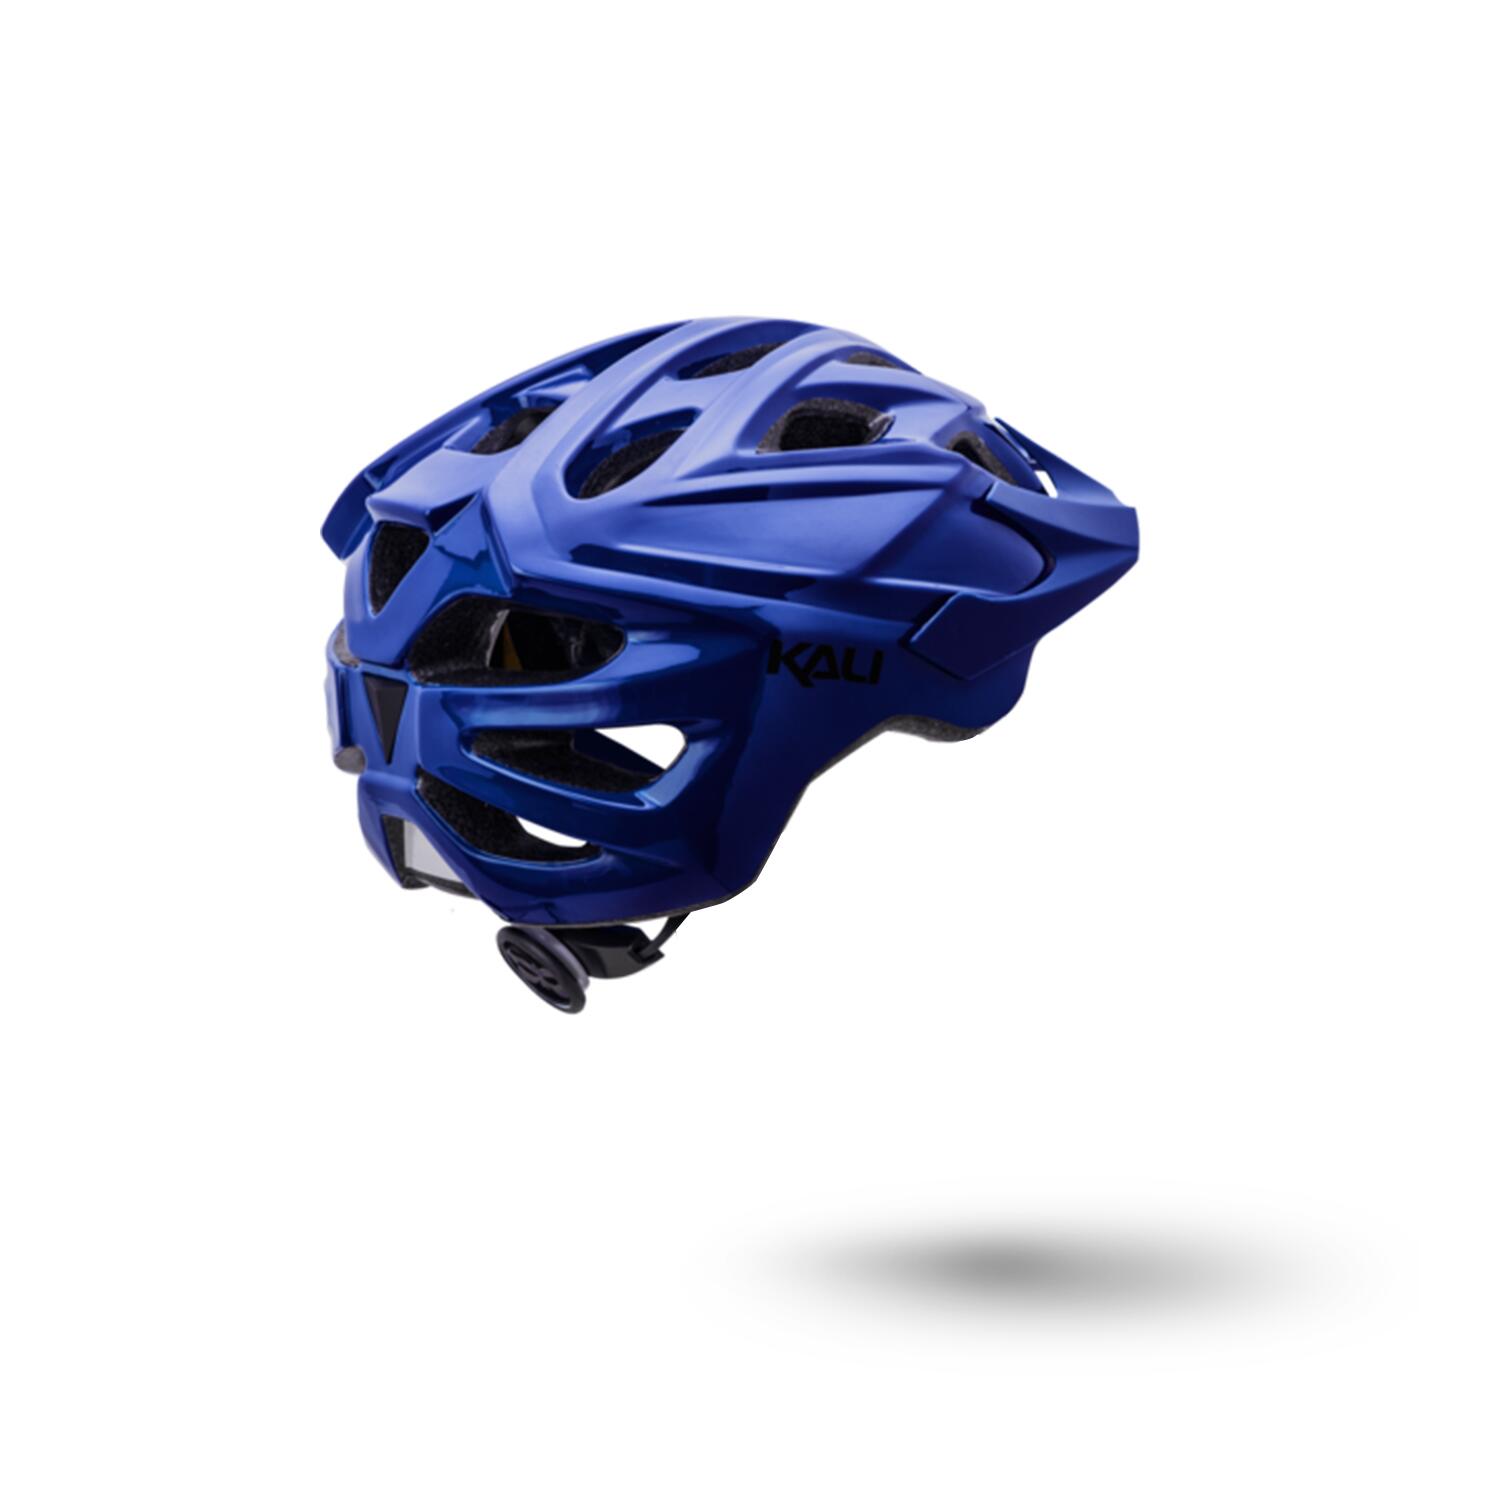 Kali Chakra Solo Trail Helmet - Solid Blue 2/3